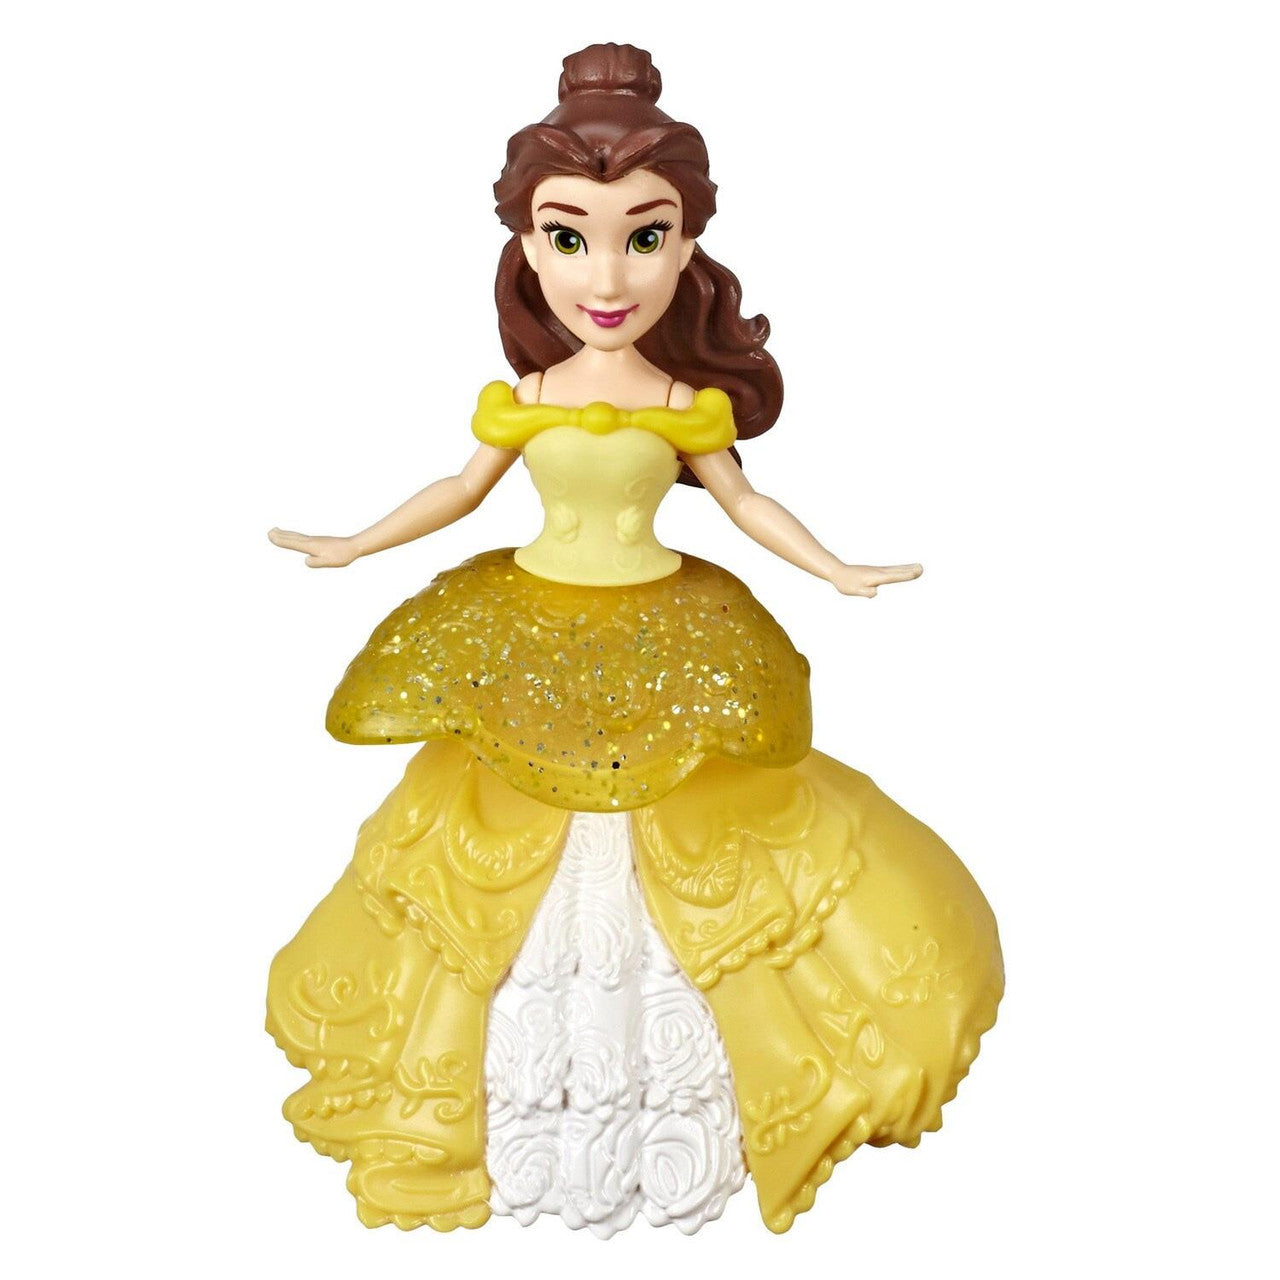 Hasbro Disney mini Princess Bella Doll with Royal Clips Fashion 3.5-inch